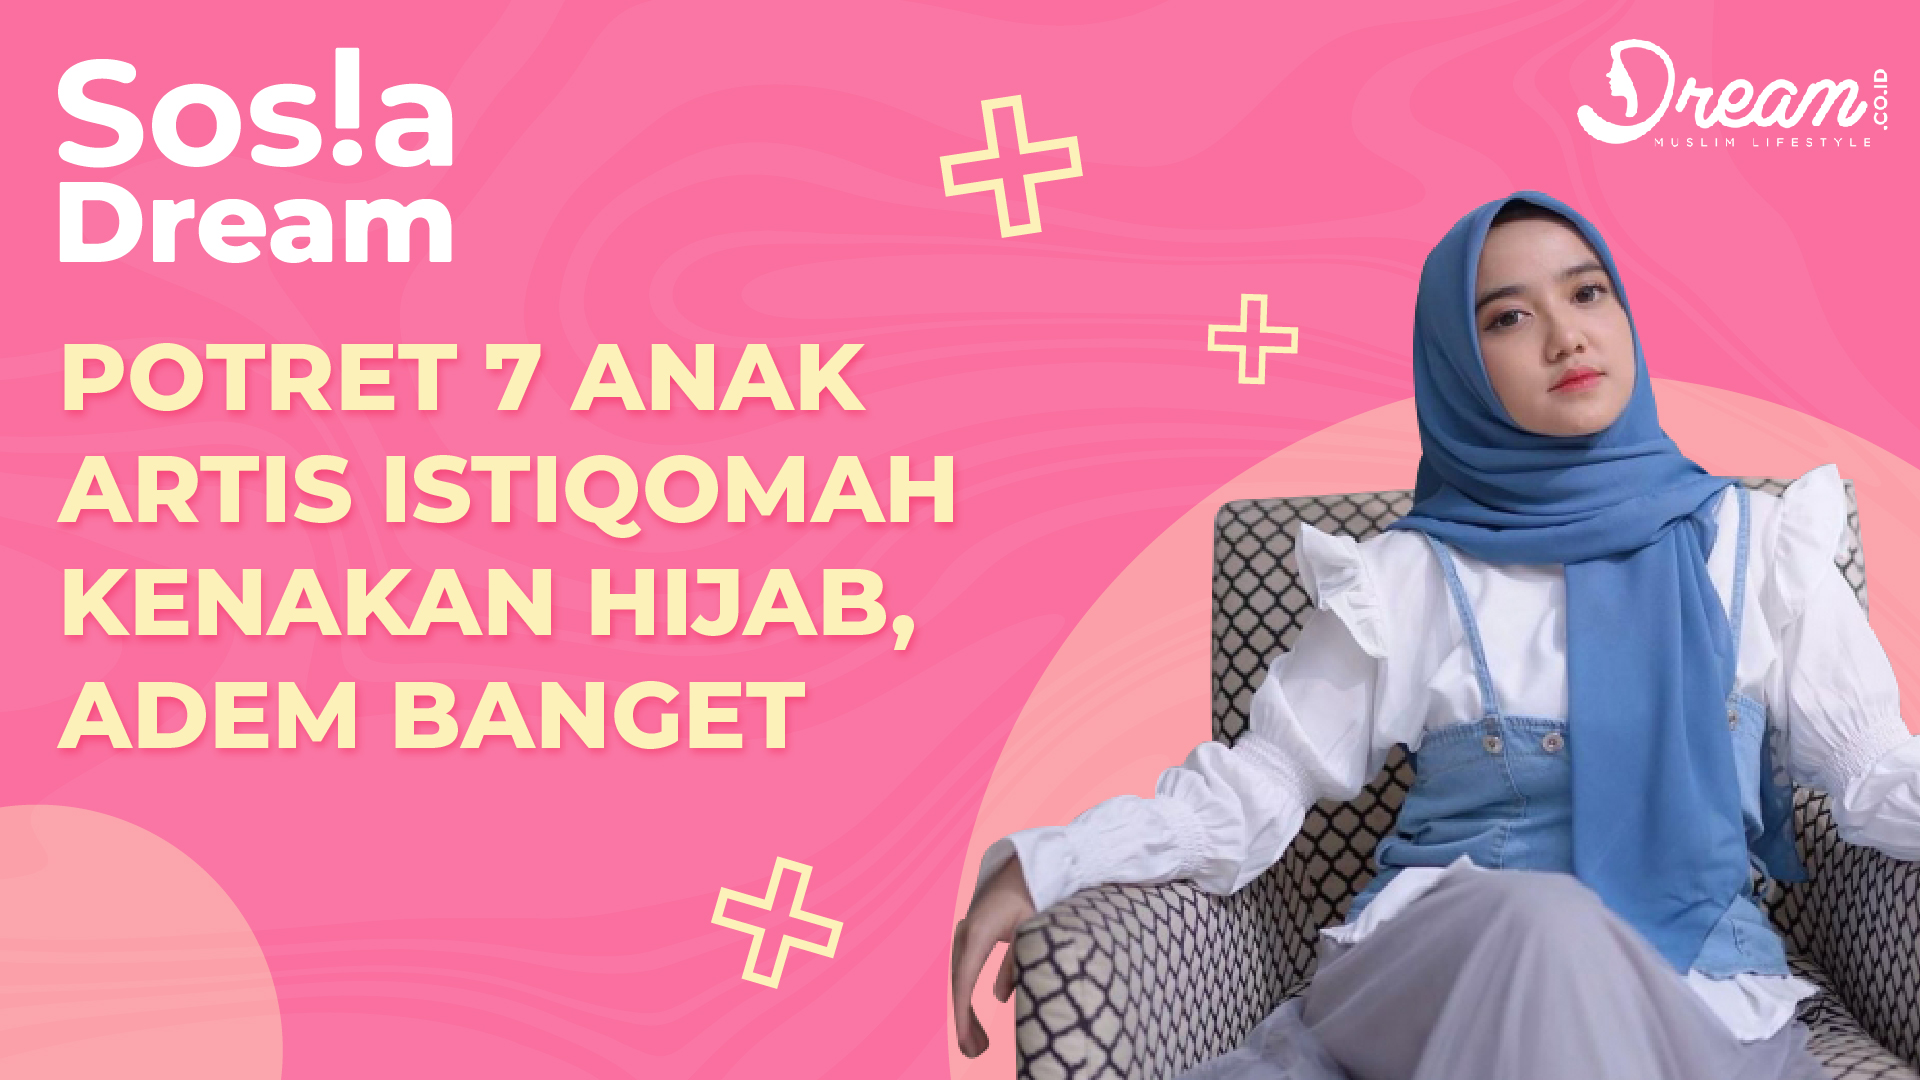 Potret 7 Anak Artis Istiqomah Kenakan Hijab, Adem Banget!